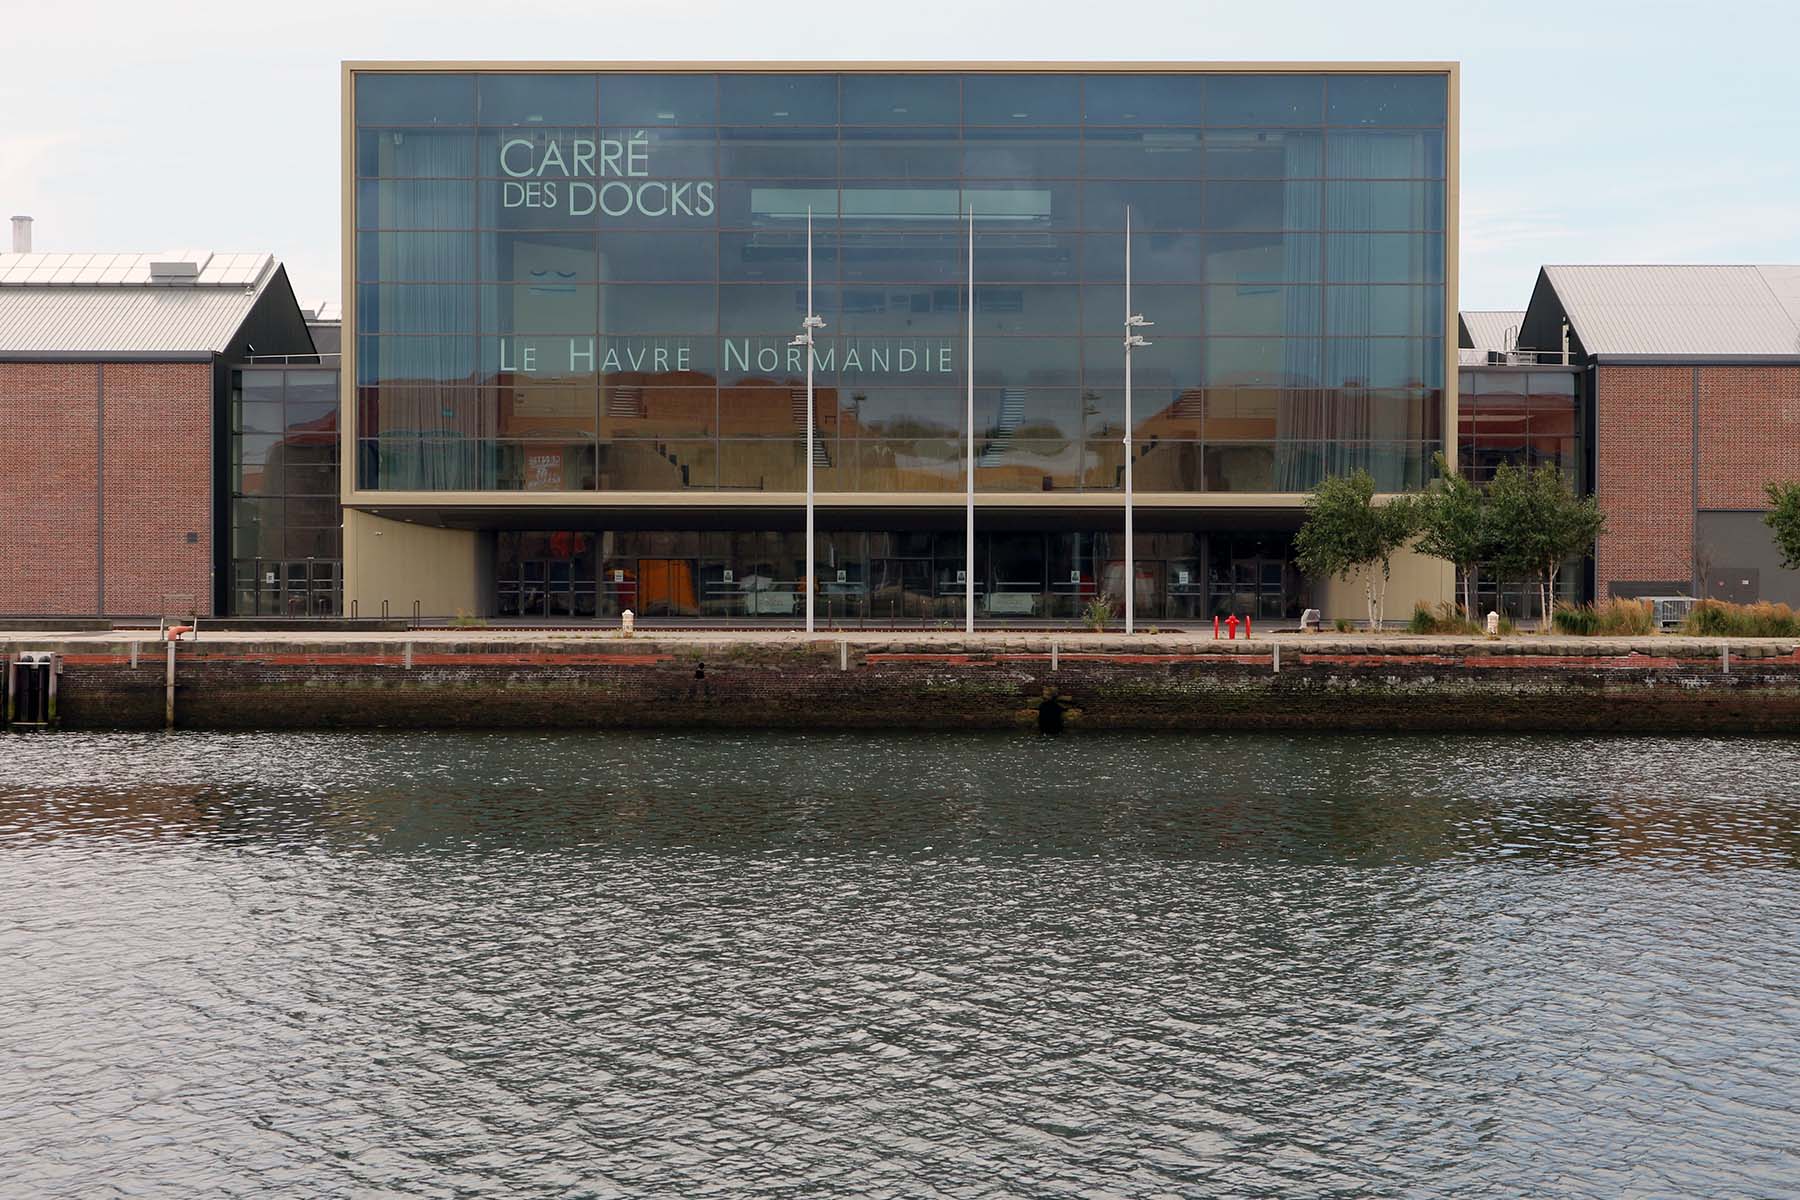 Parcours Les Bassins. Ein weiteres Highlight das Kongresszentrum Carré des Docks von Paul Andreu und Thomas Richez.